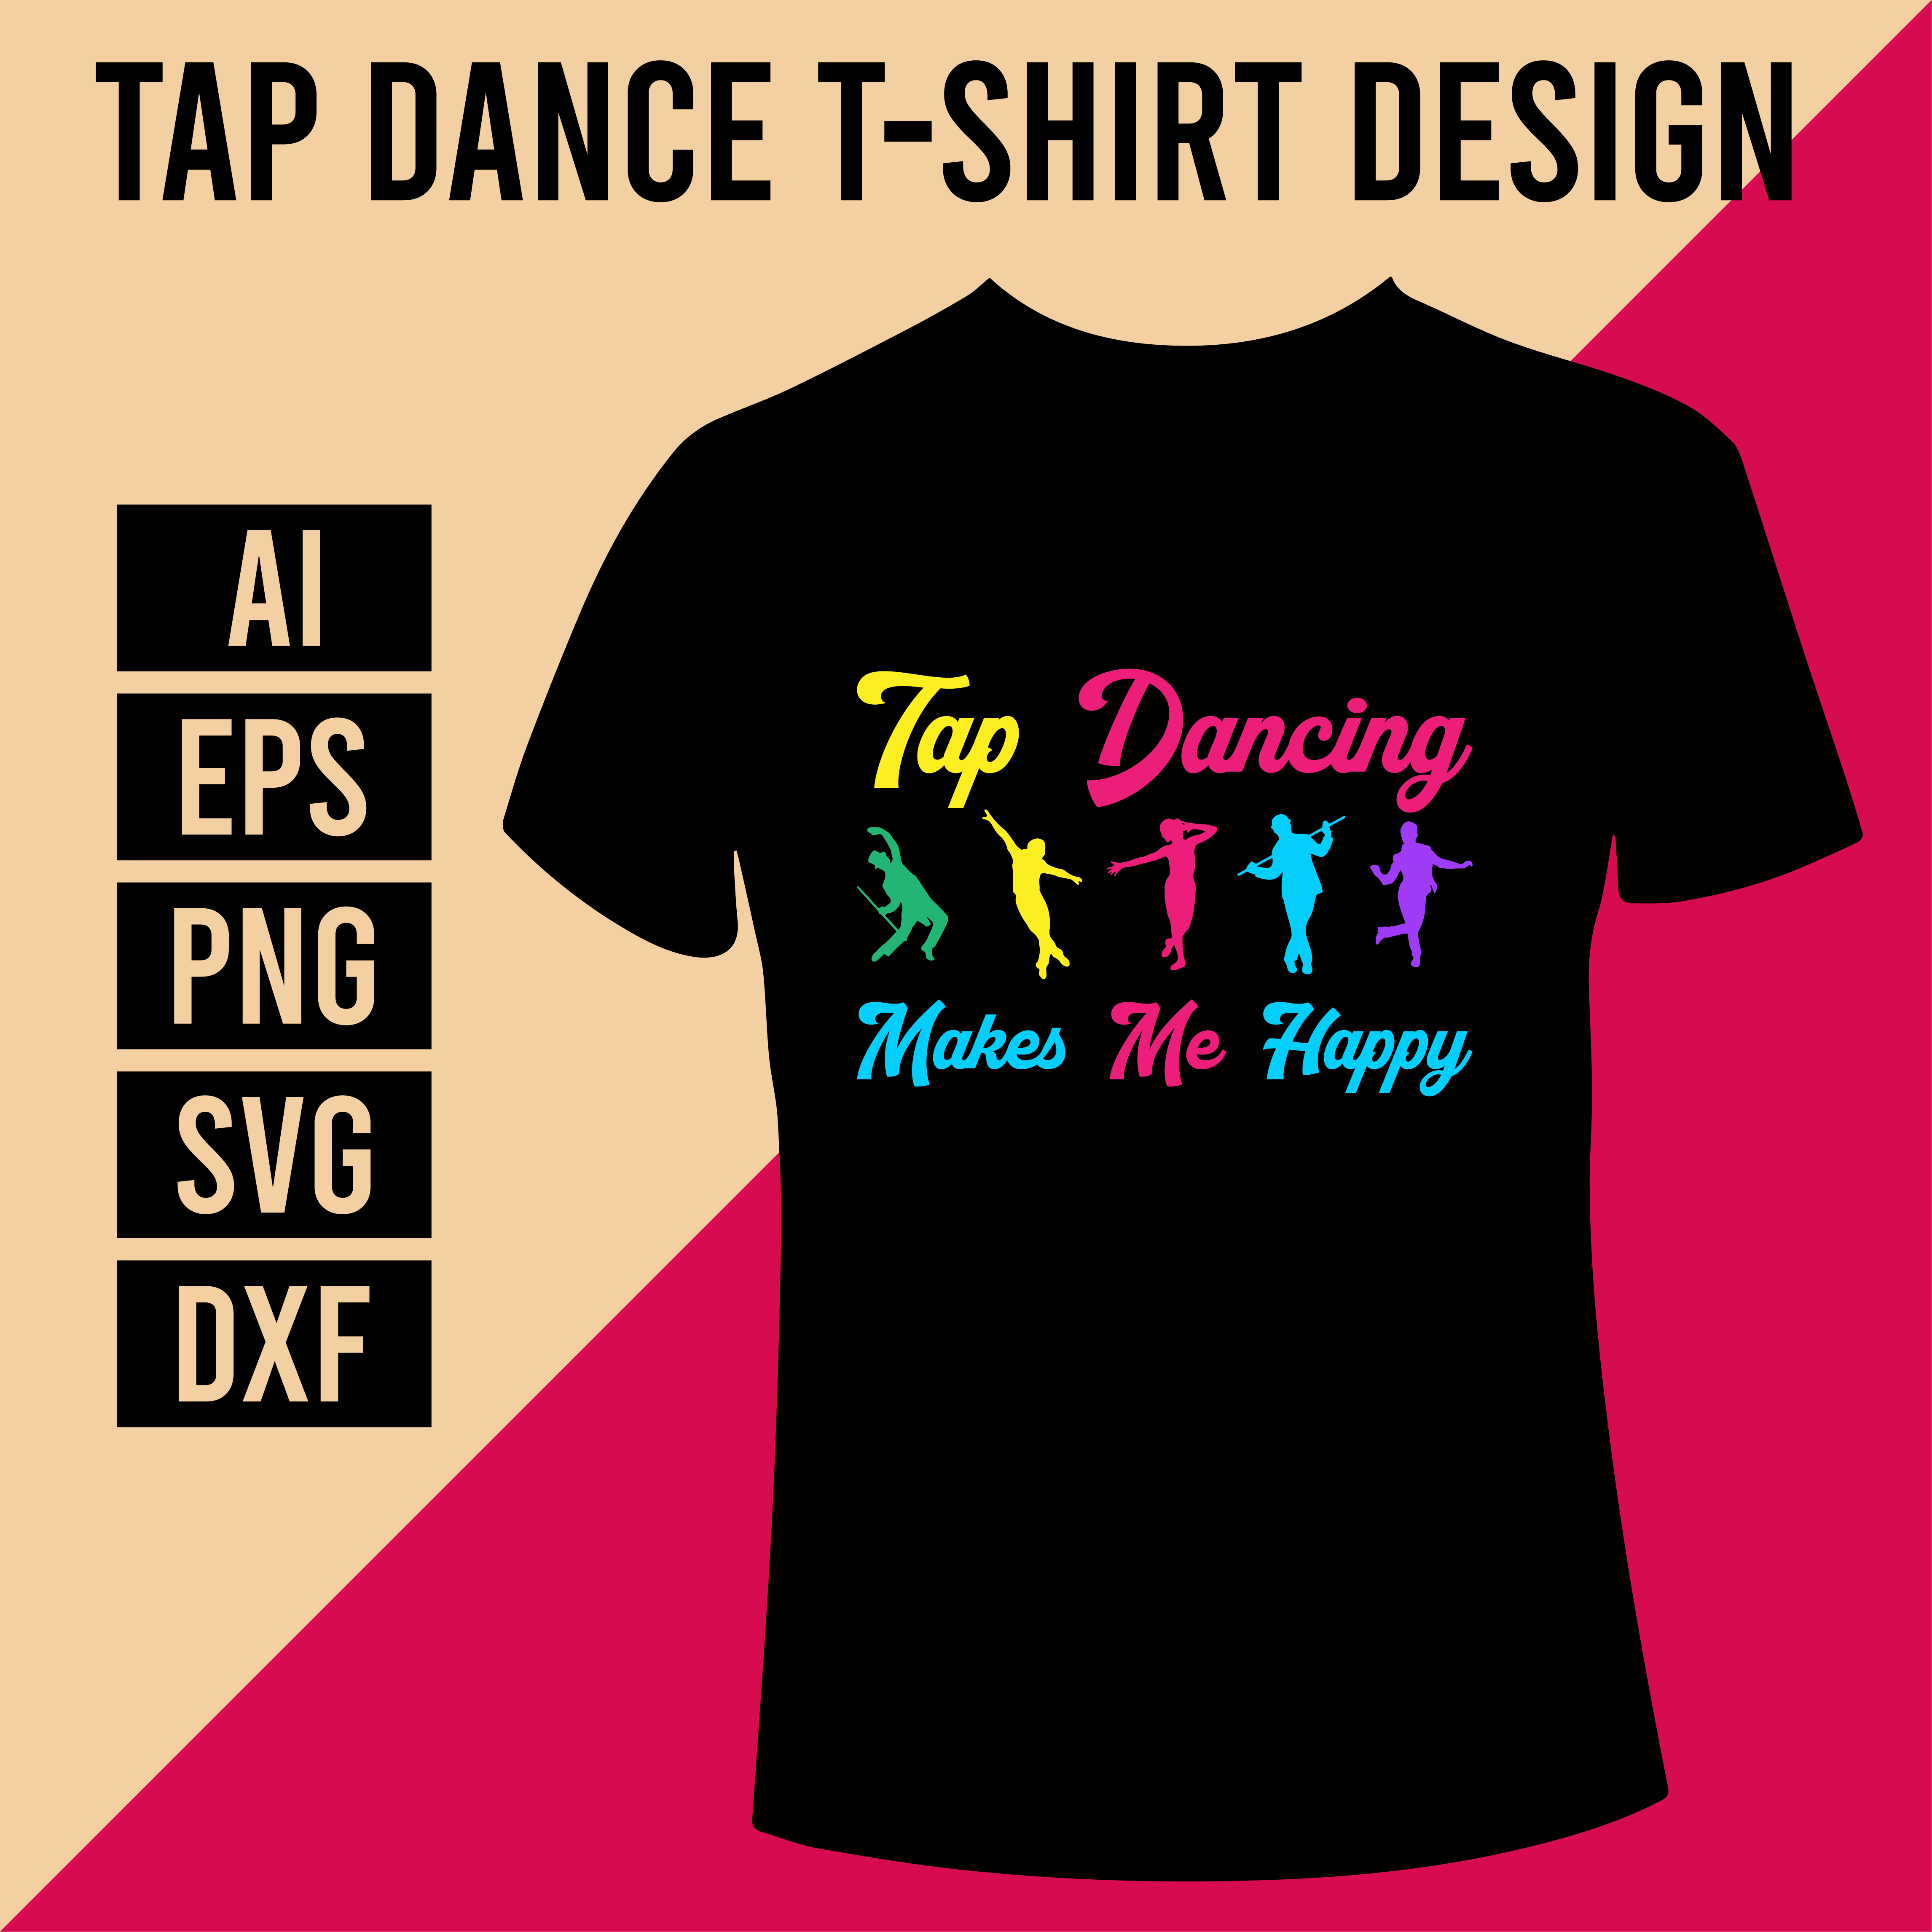 Tap Dance T-Shirt Design cover image.